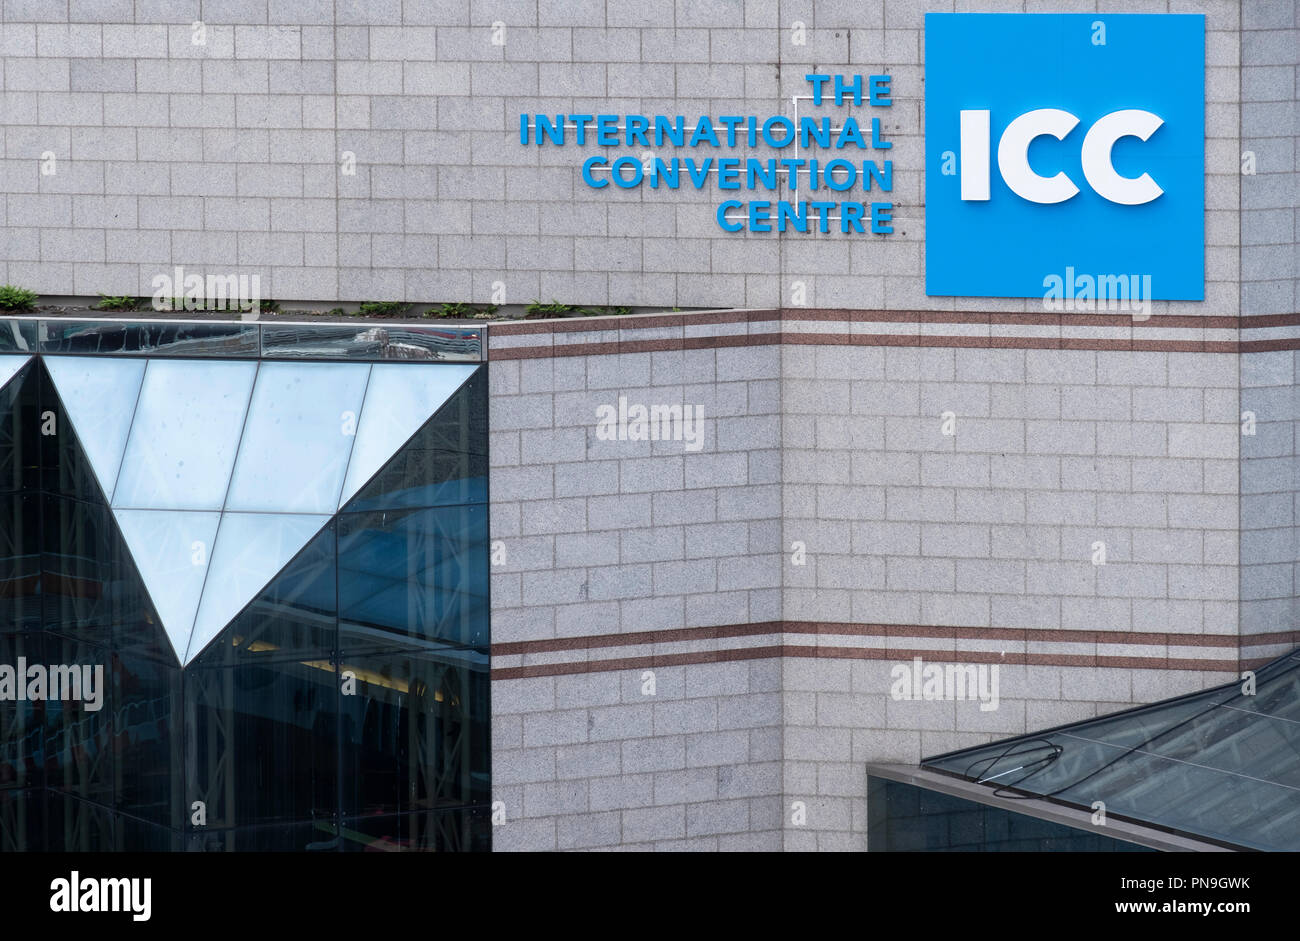 The International Convention Centre ICC Birmingham Stock Photo